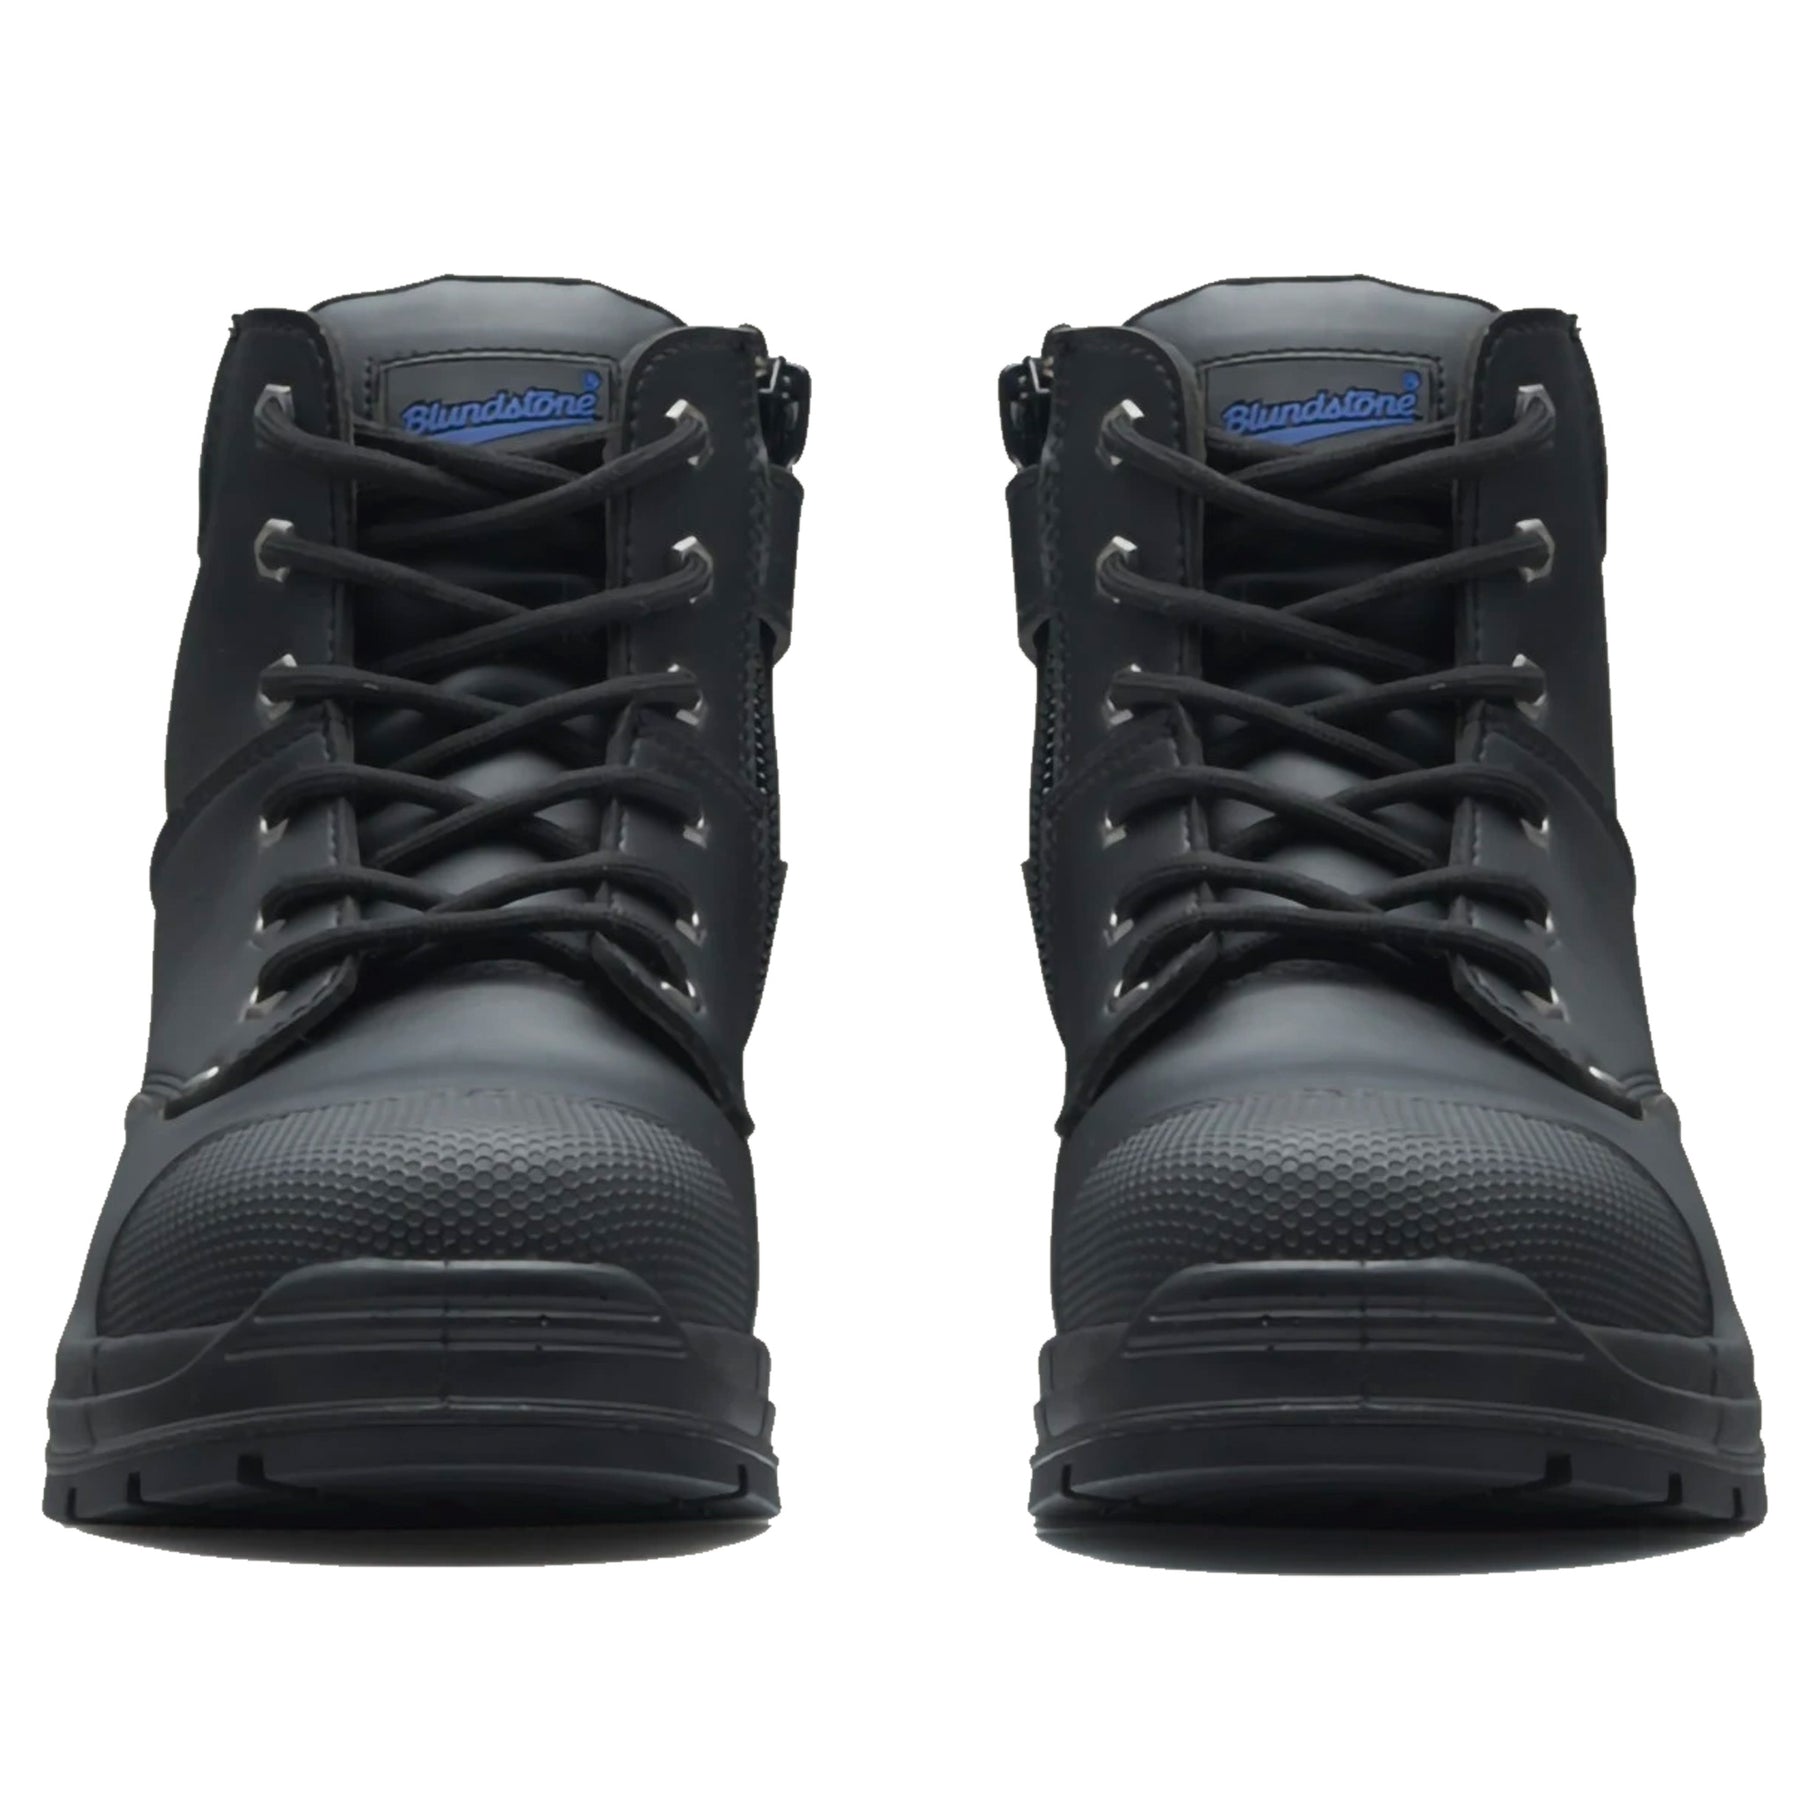 blundstone 322 zip safety boot in black